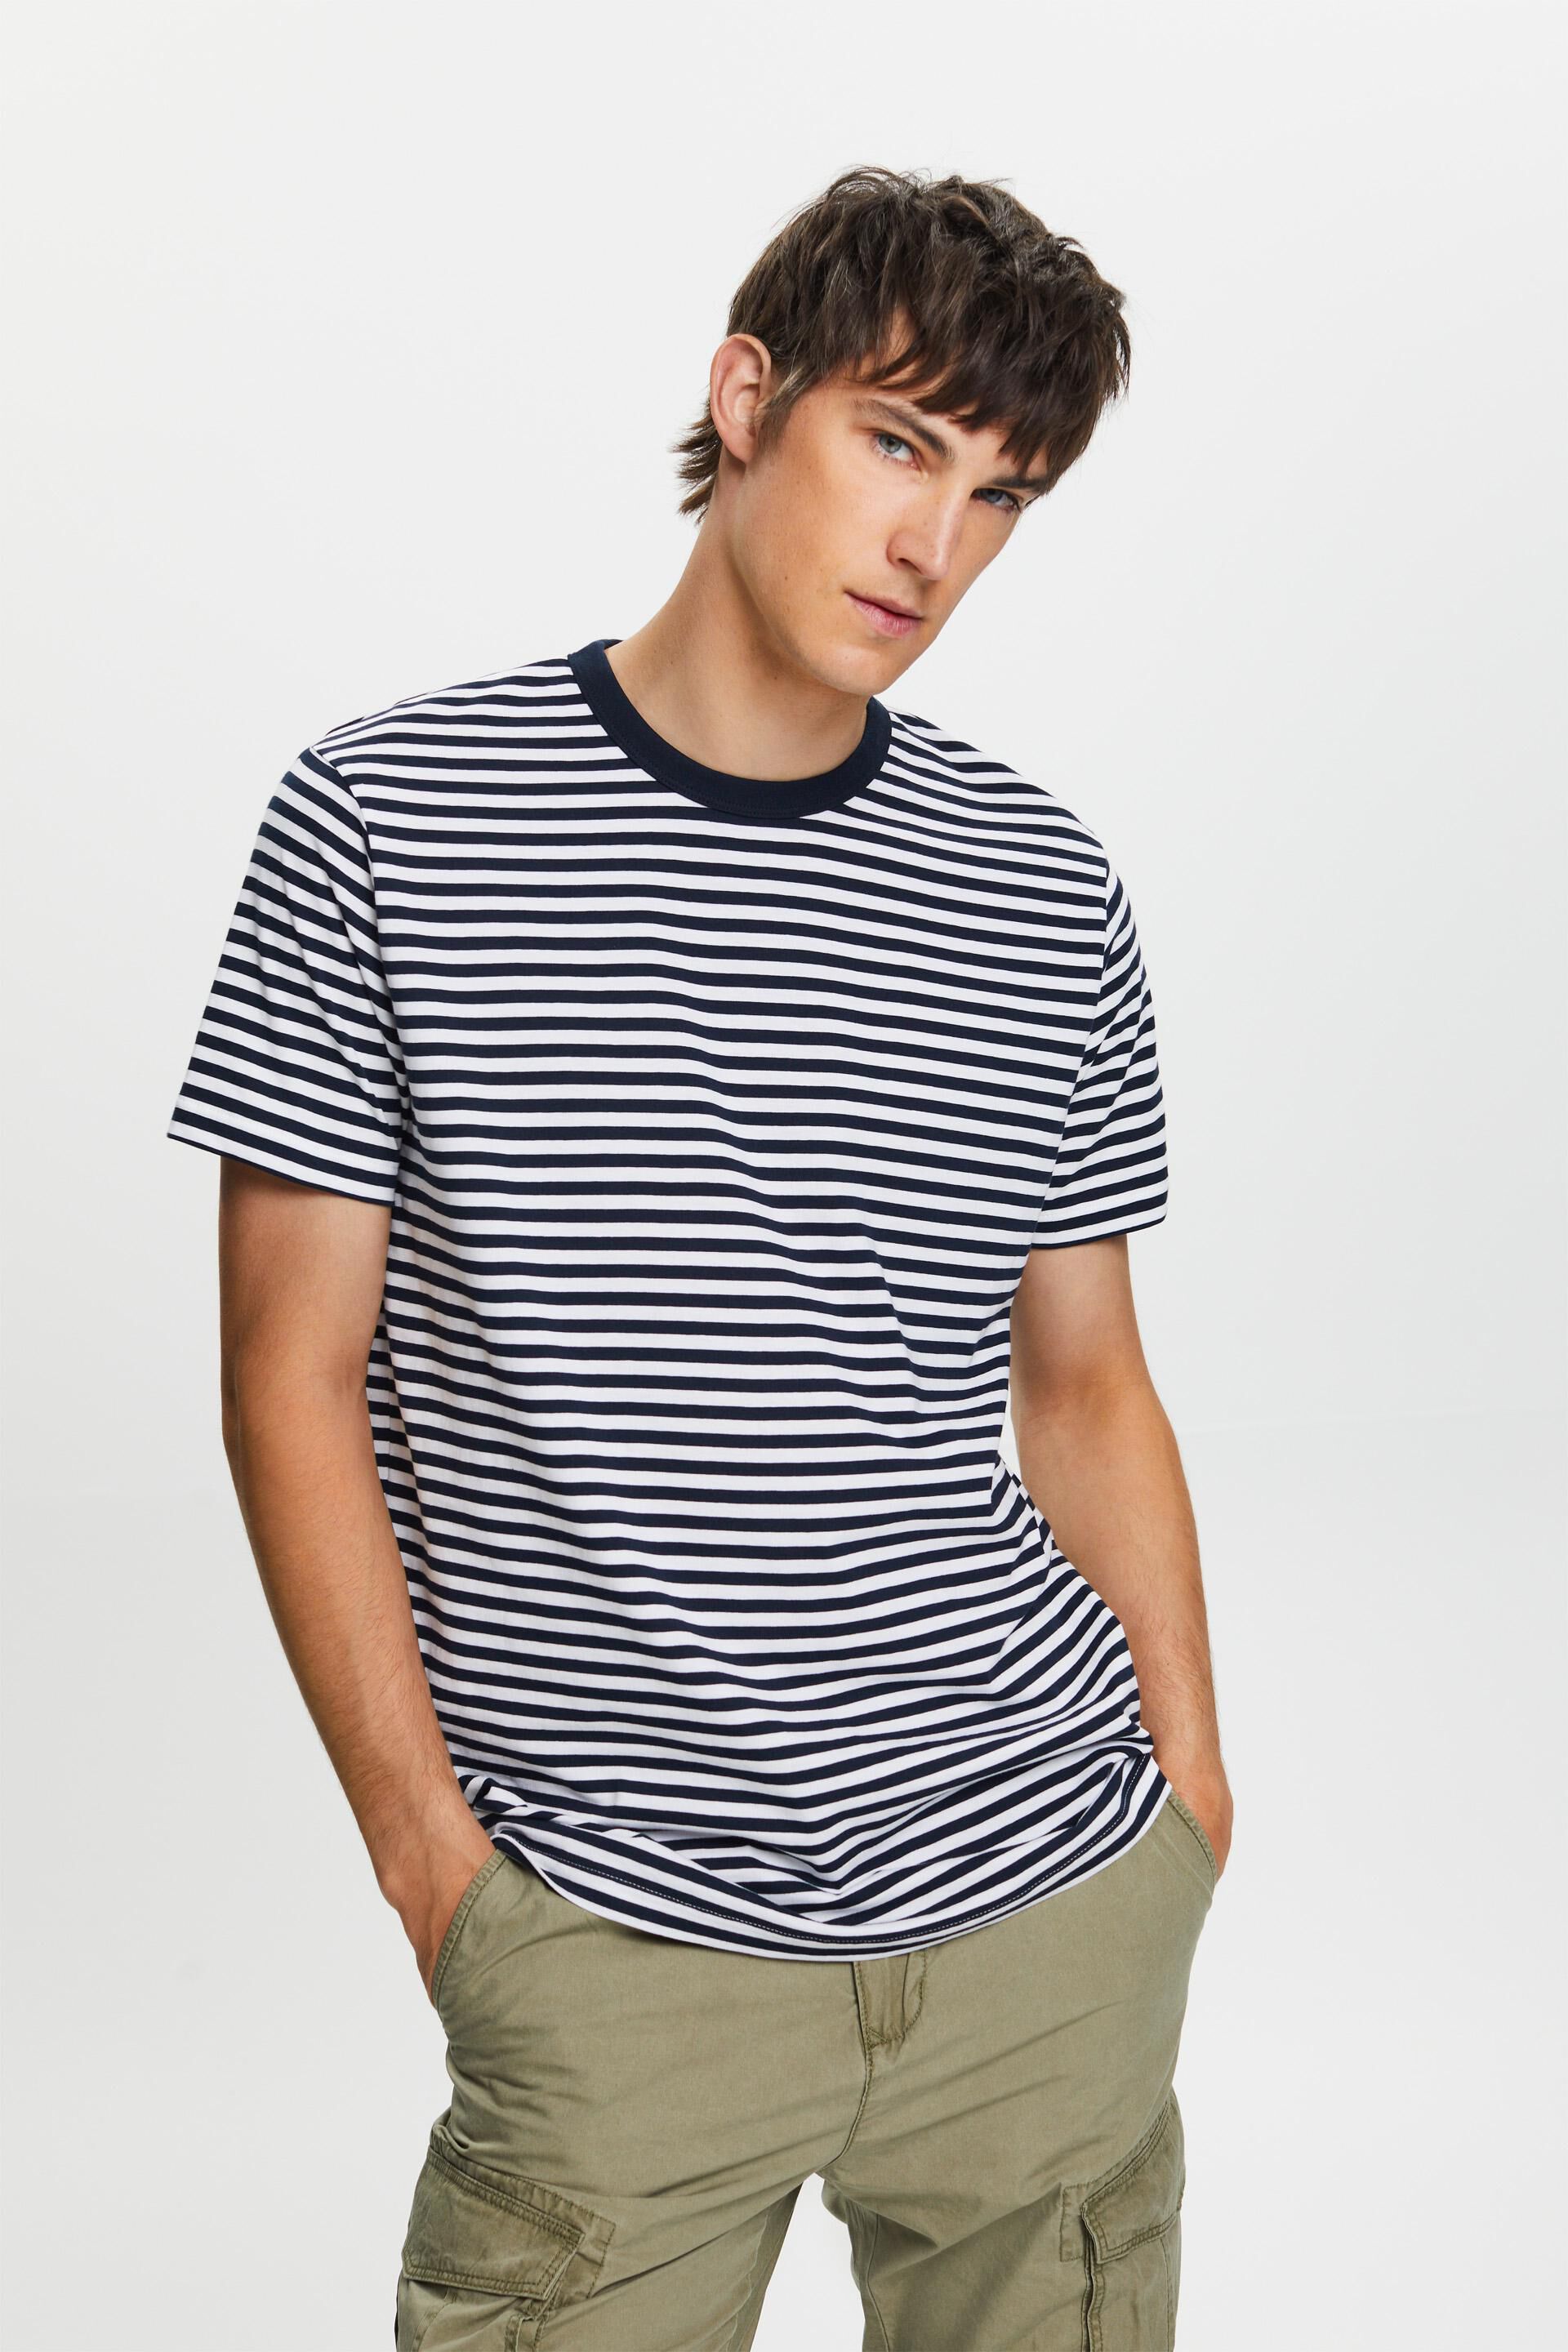 Esprit T-shirt, cotton 100% Striped jersey